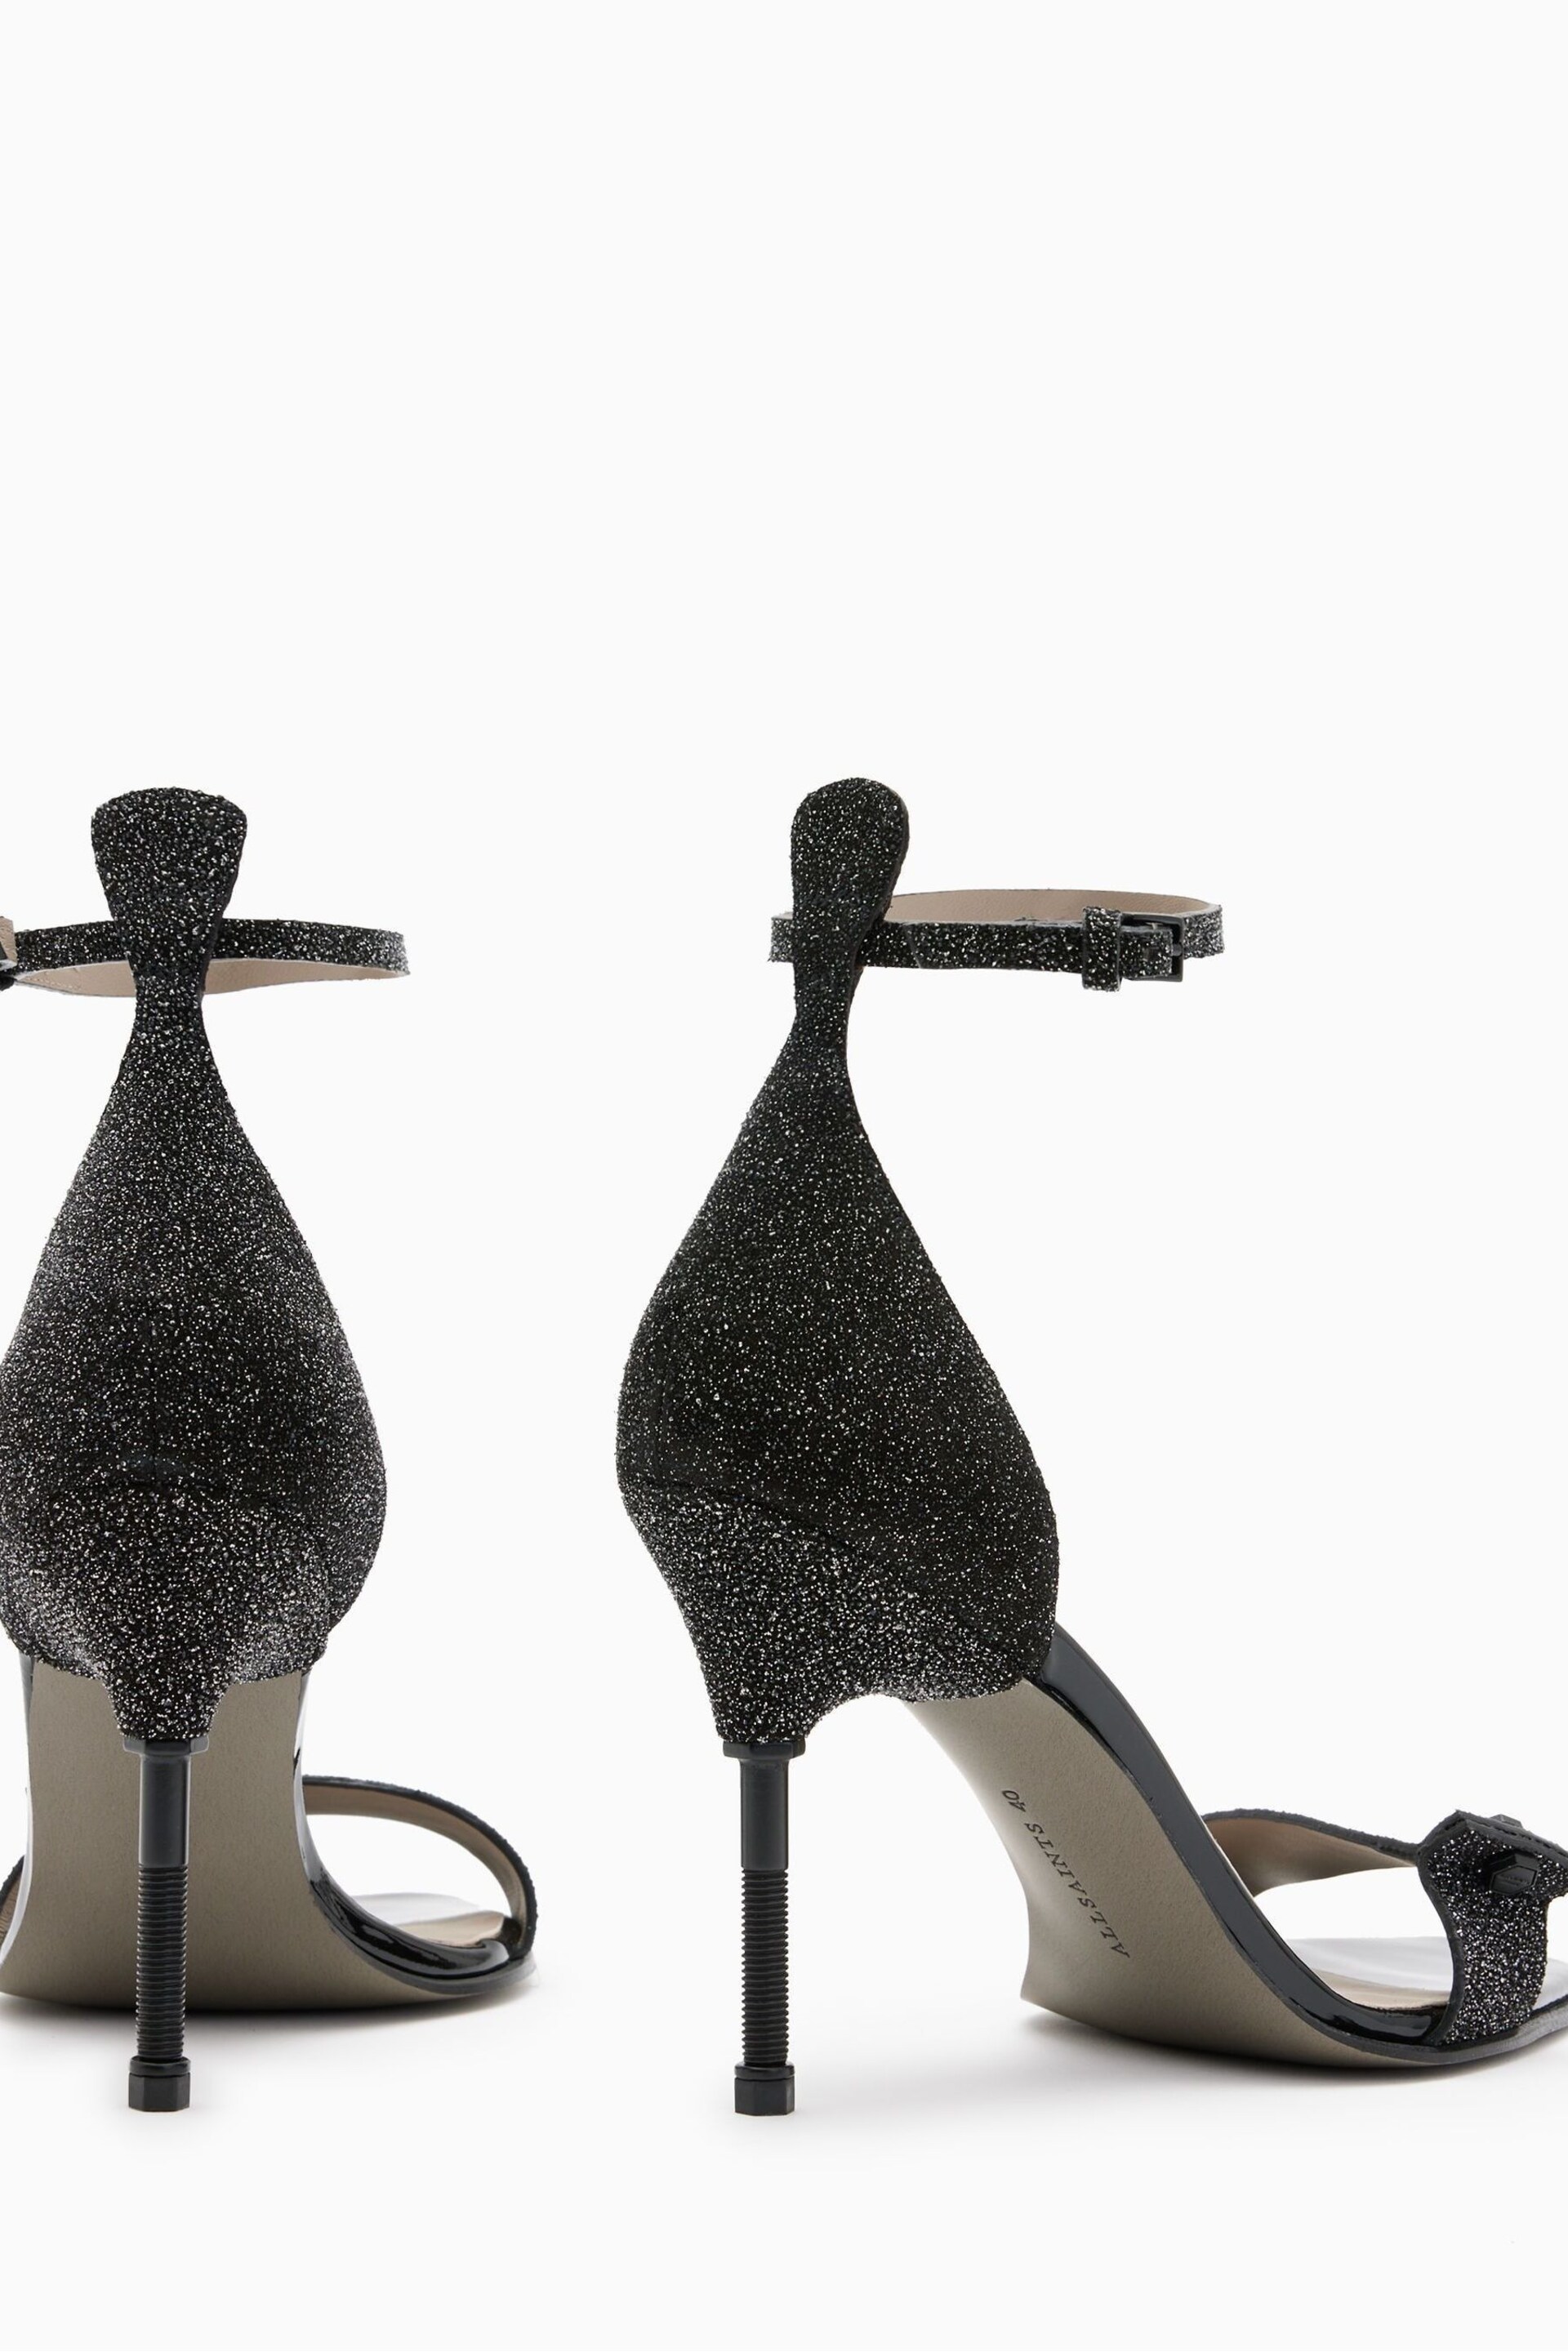 AllSaints Natural Betty Sparkle Sandals - Image 3 of 5